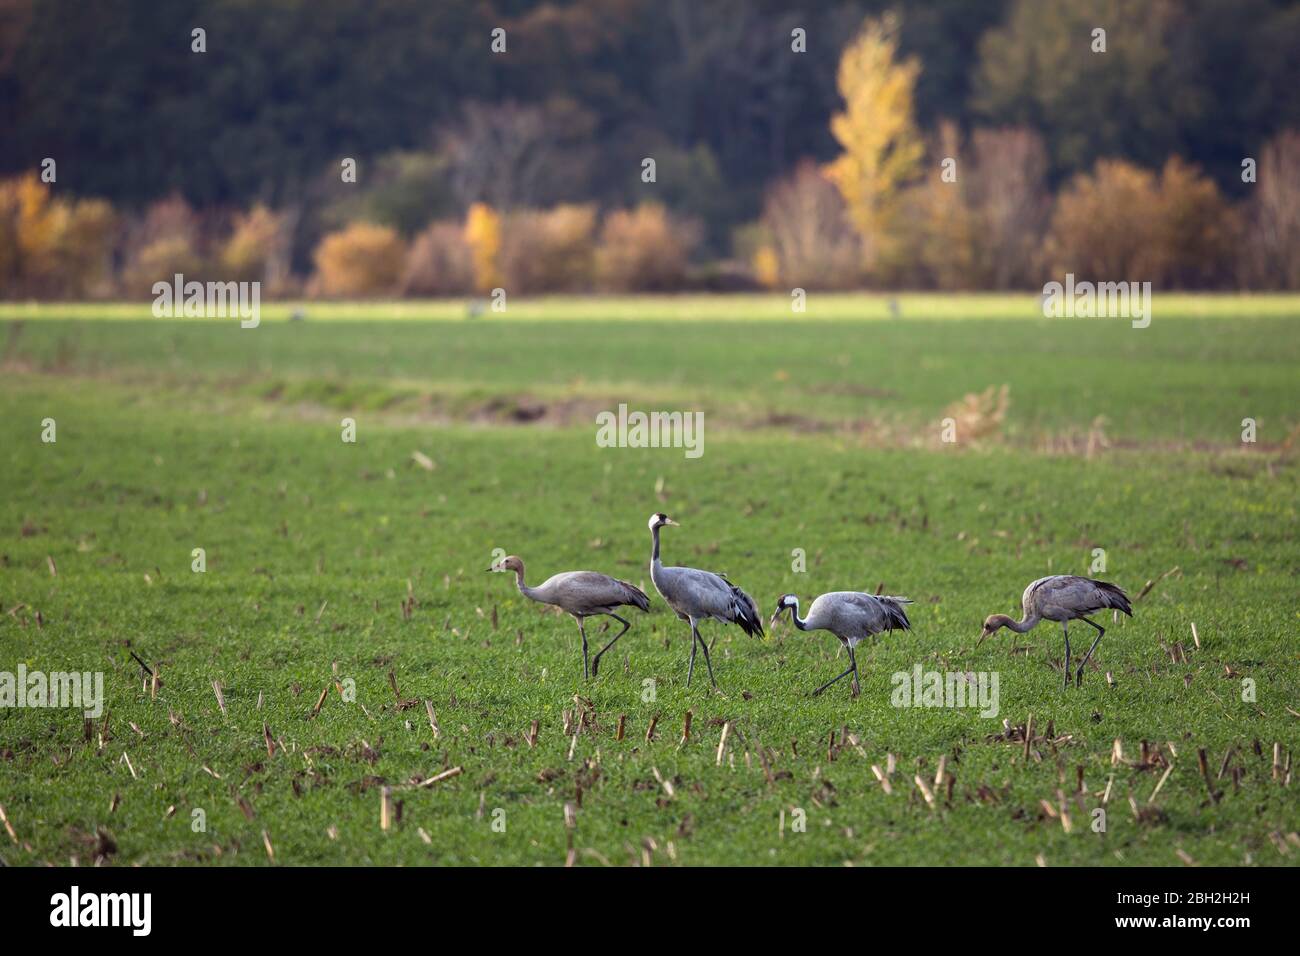 Germany, Common cranes (Grus grus) grazing in field Stock Photo